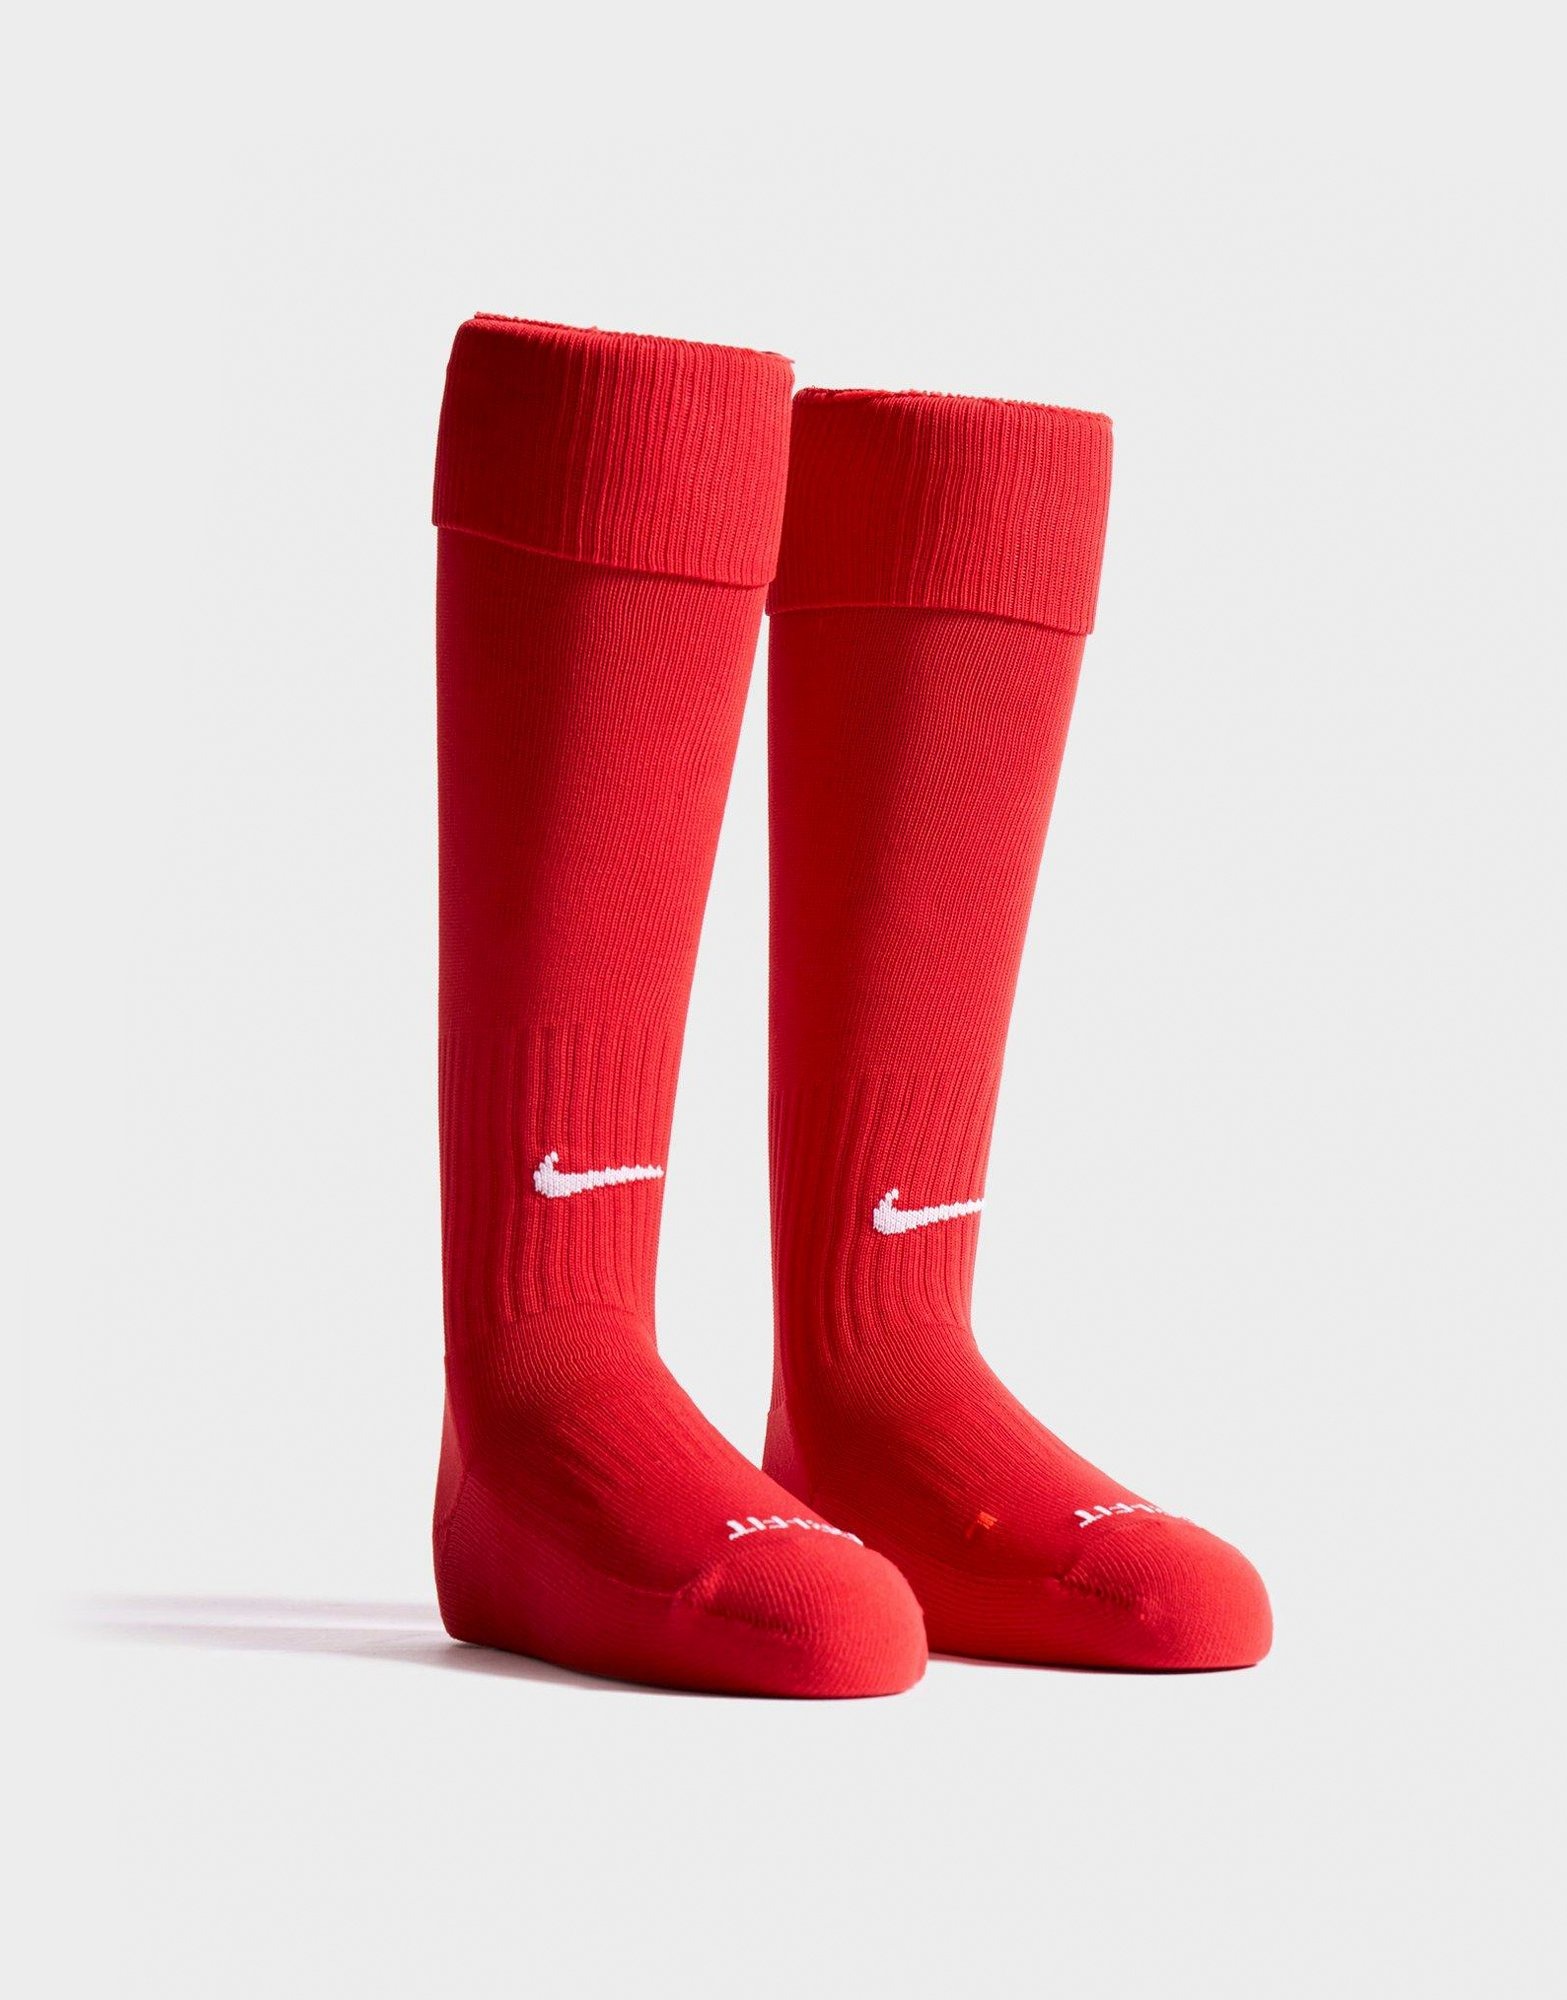 Dictatuur Afleiden Vroeg Red Nike Classic Football Socks | JD Sports UK